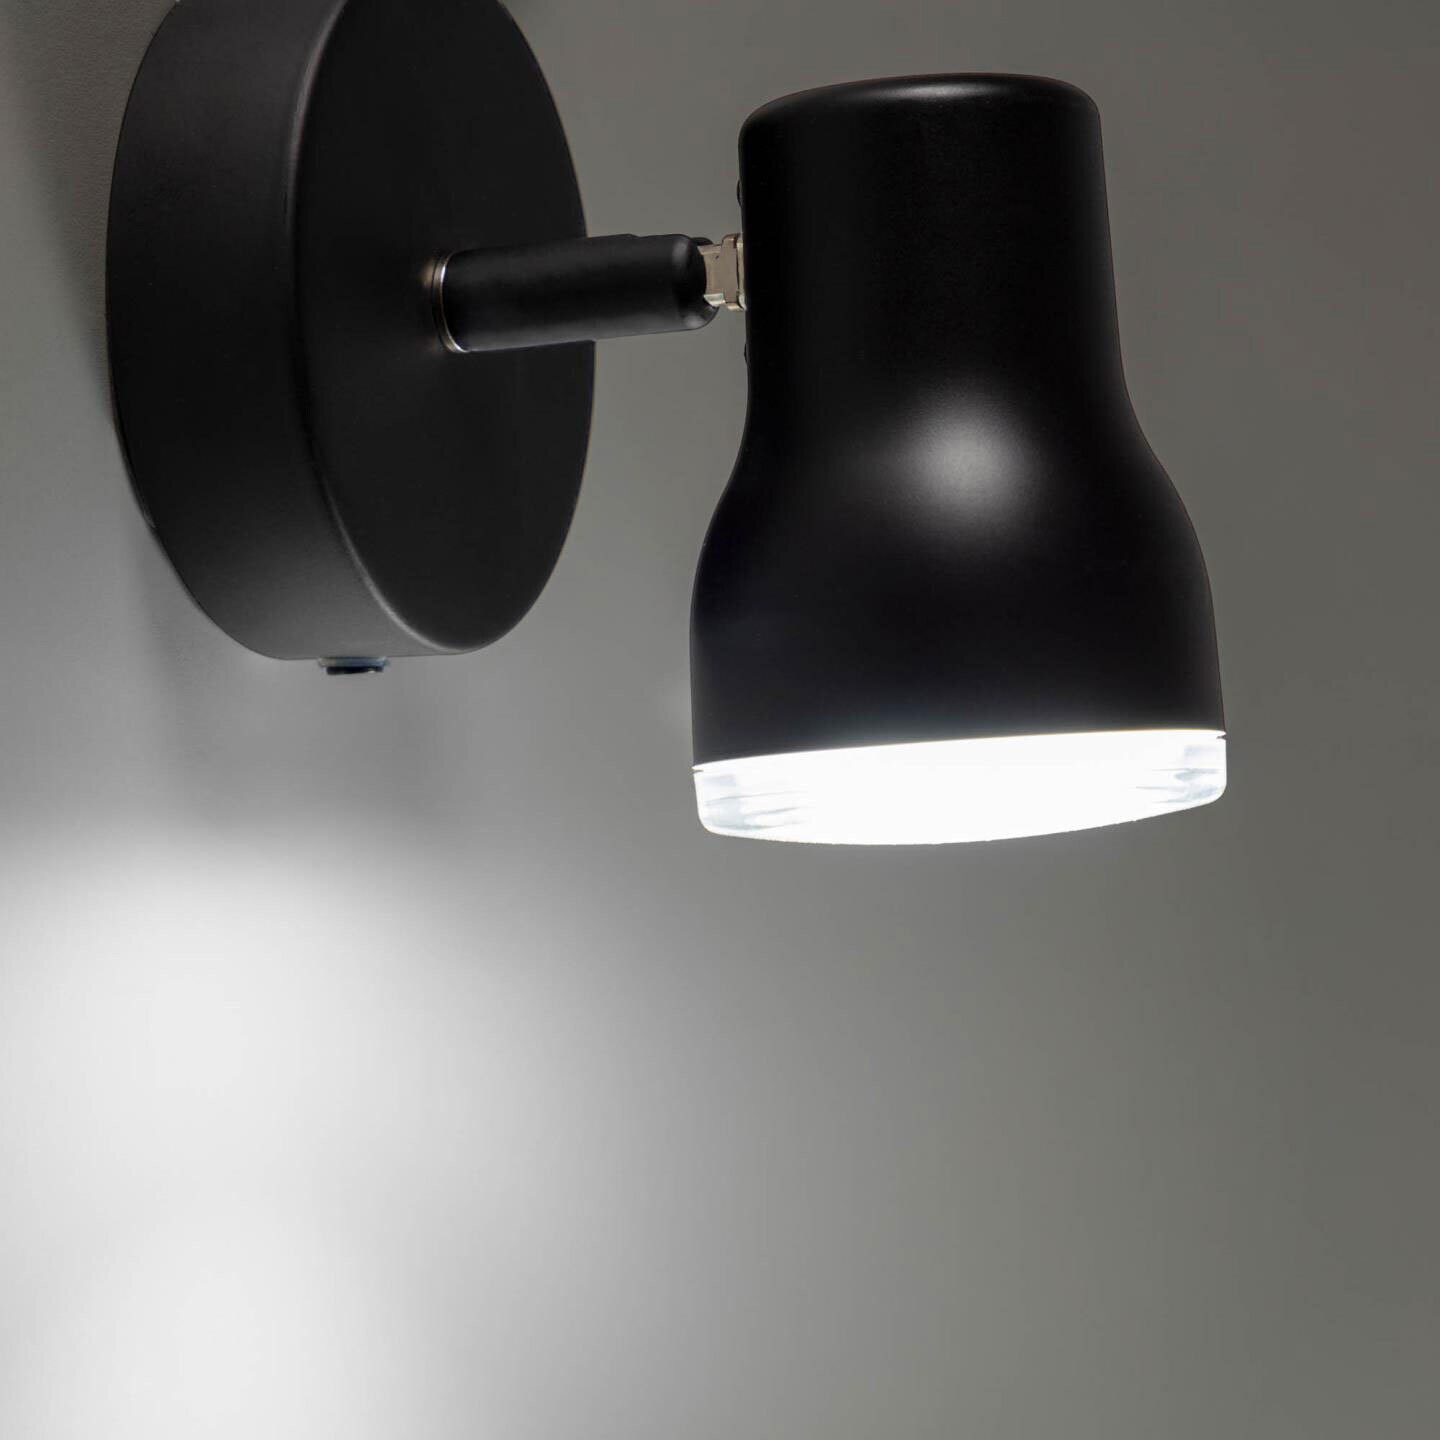 Kave Home Retrofit Badlampe Wand TEHILA schwarz